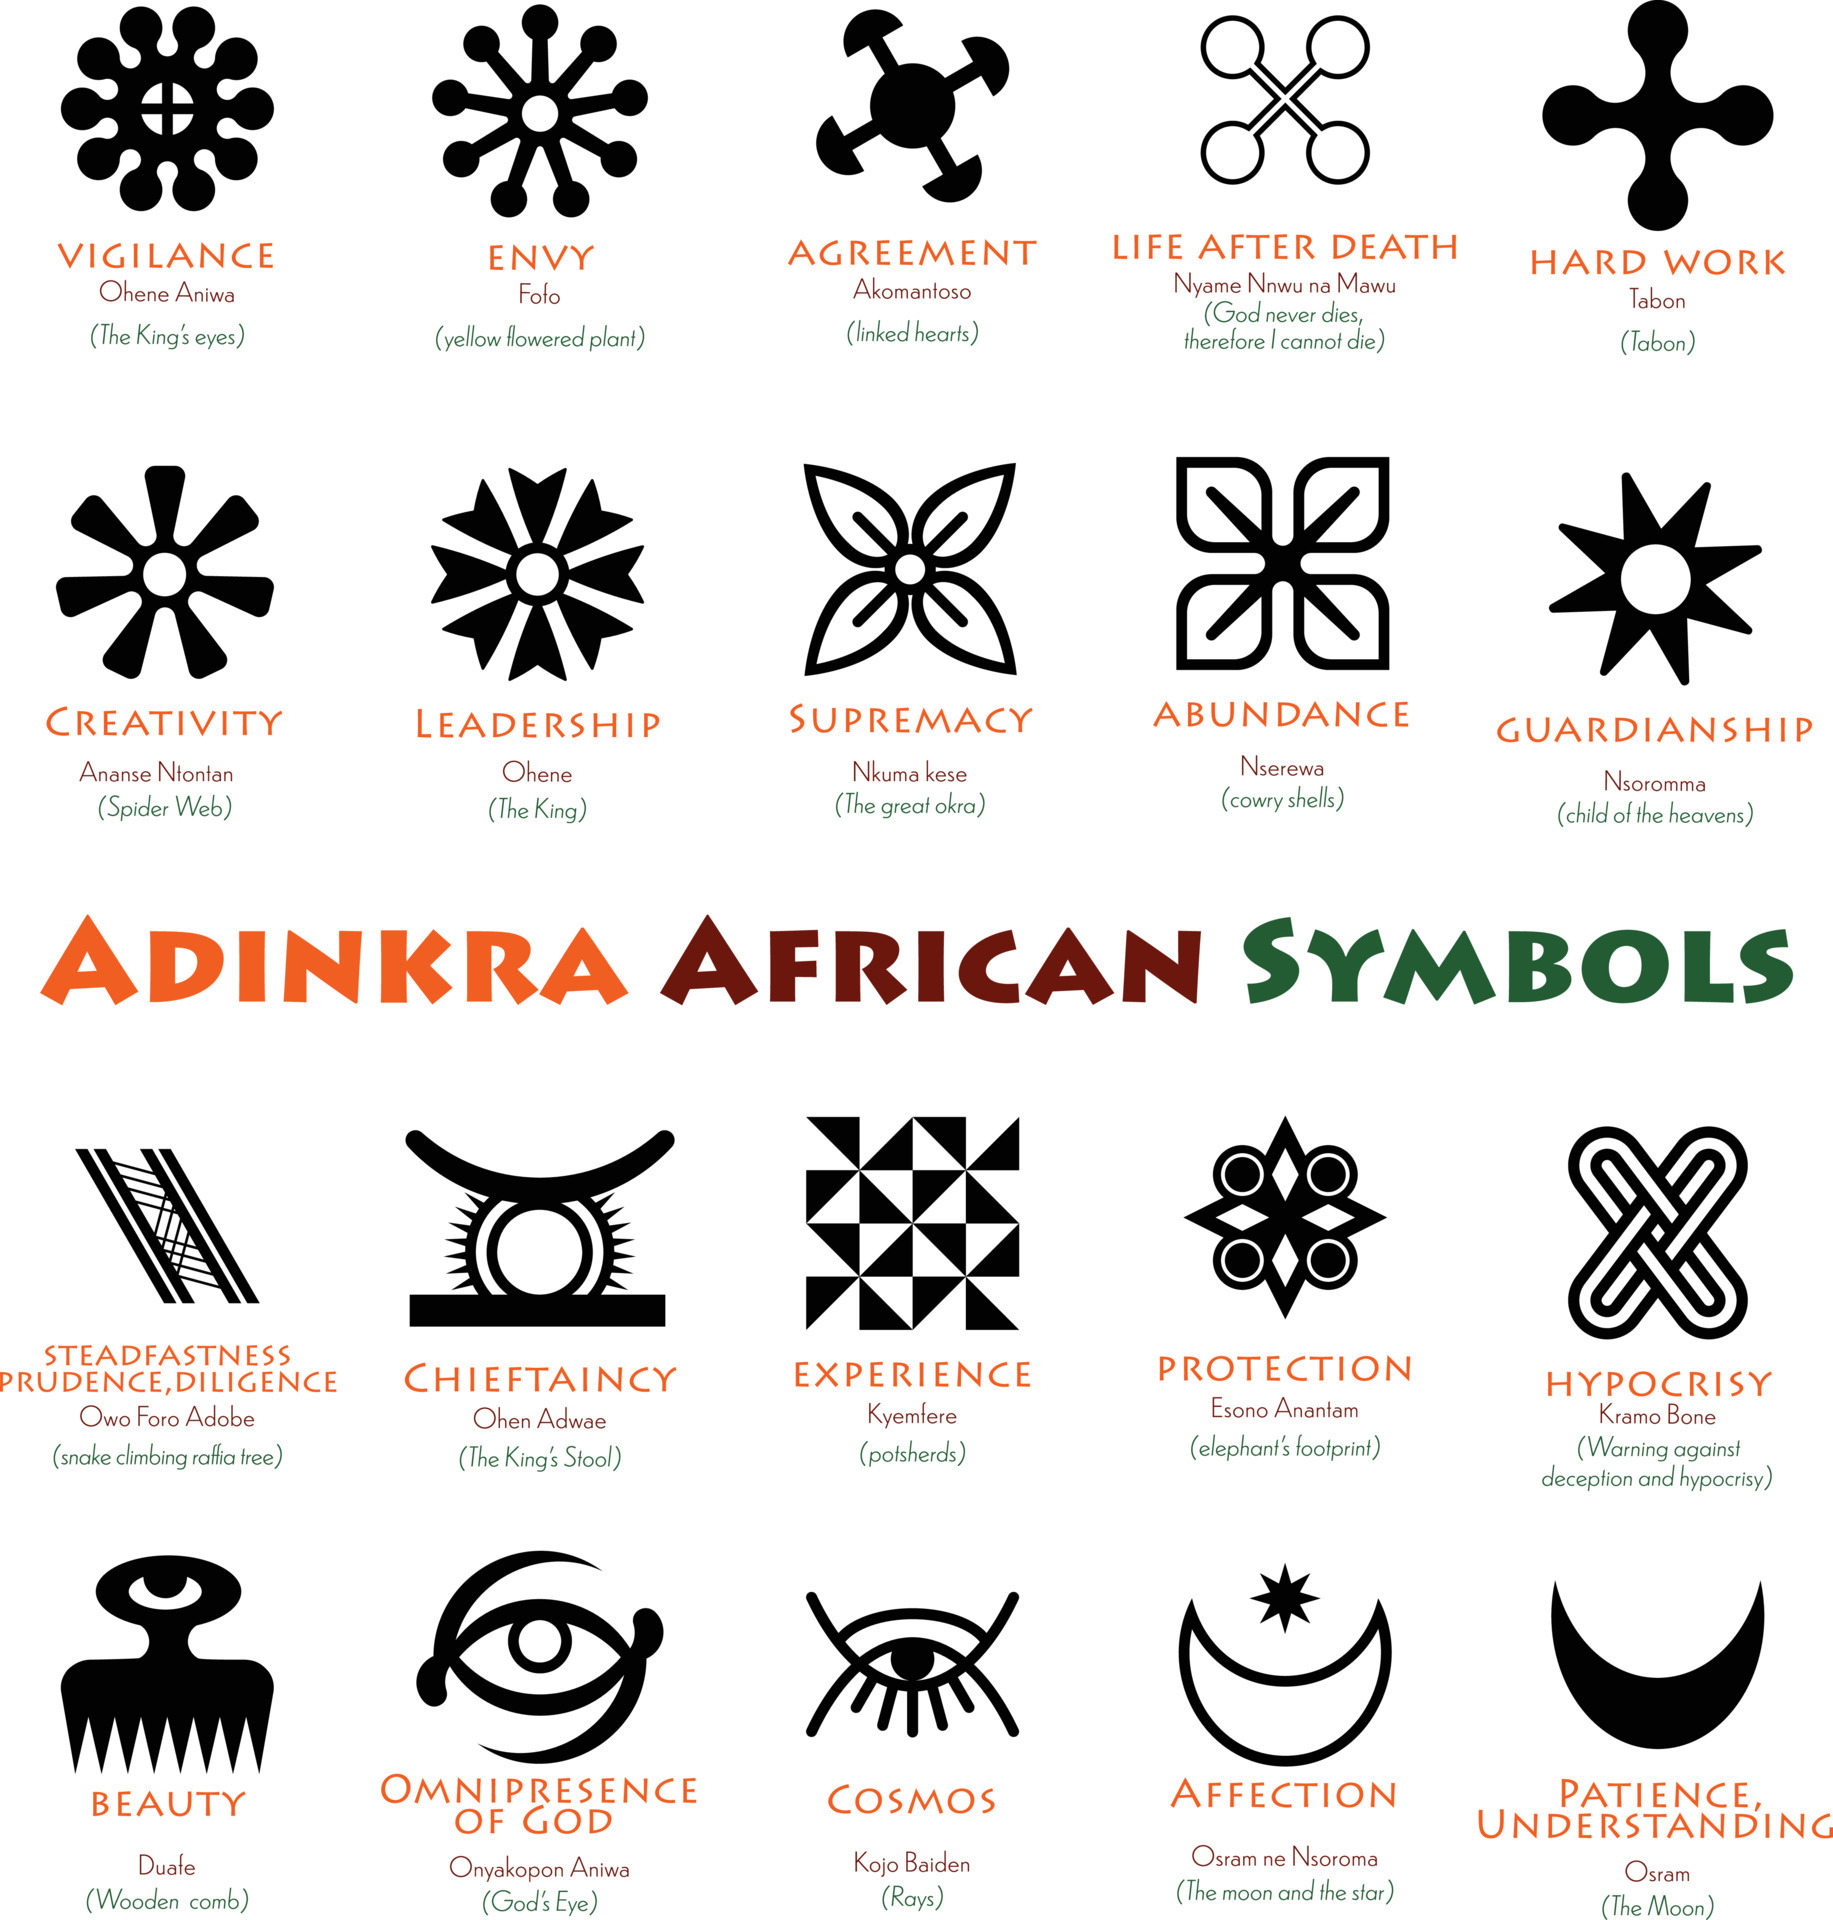 símbolos e significados do adinkra africano 12962176 Vetor no Vecteezy